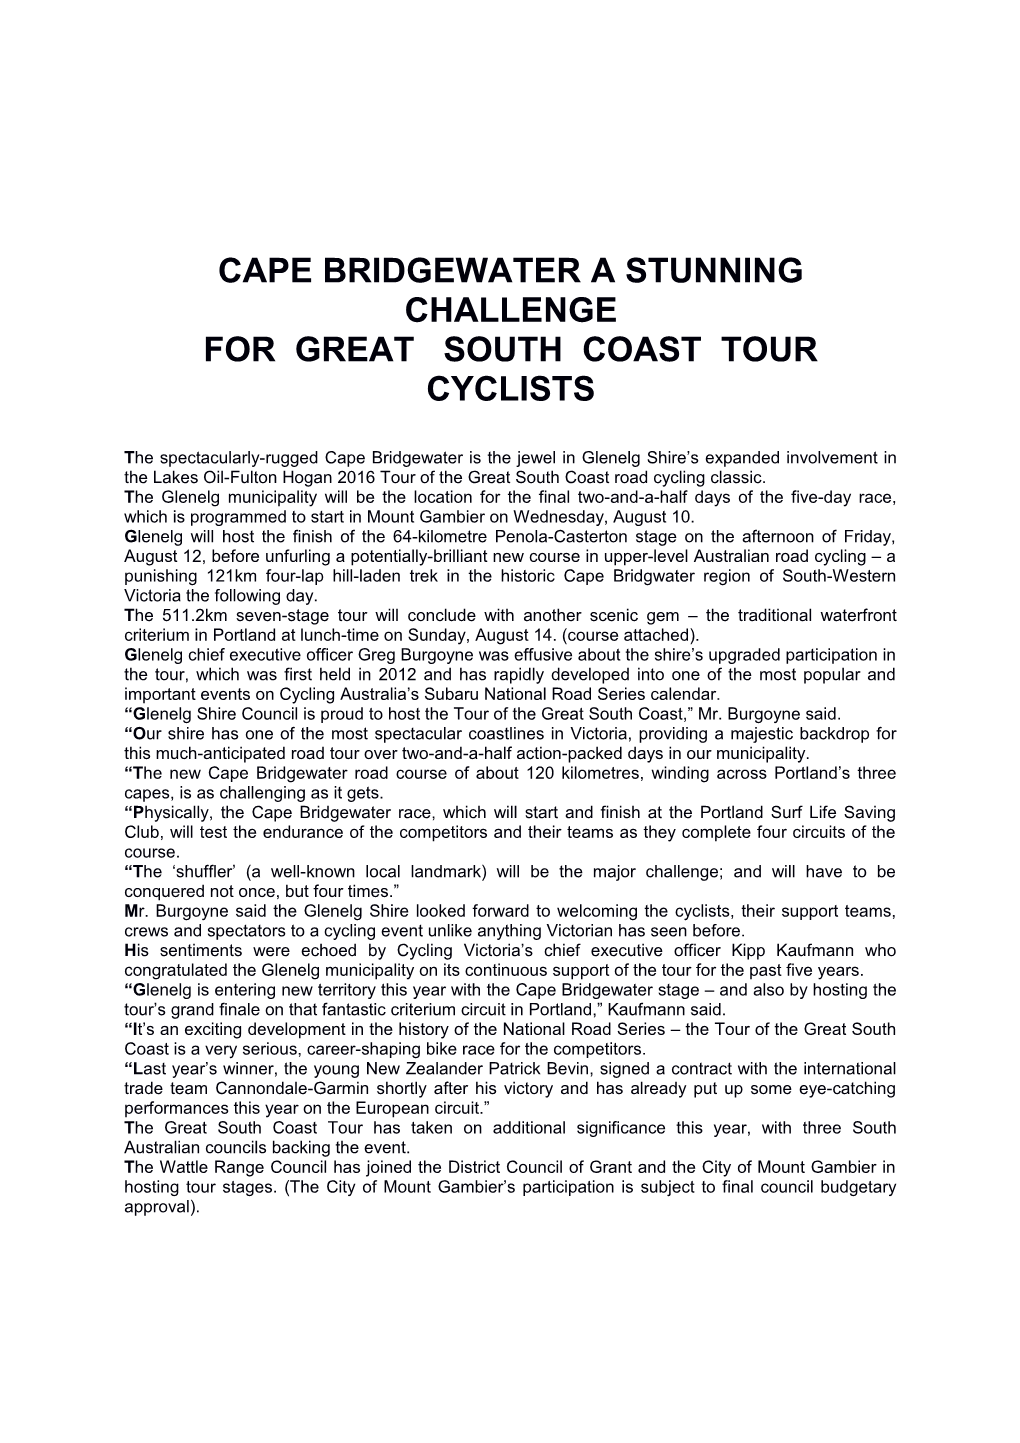 Cape Bridgewater a Stunning Challenge